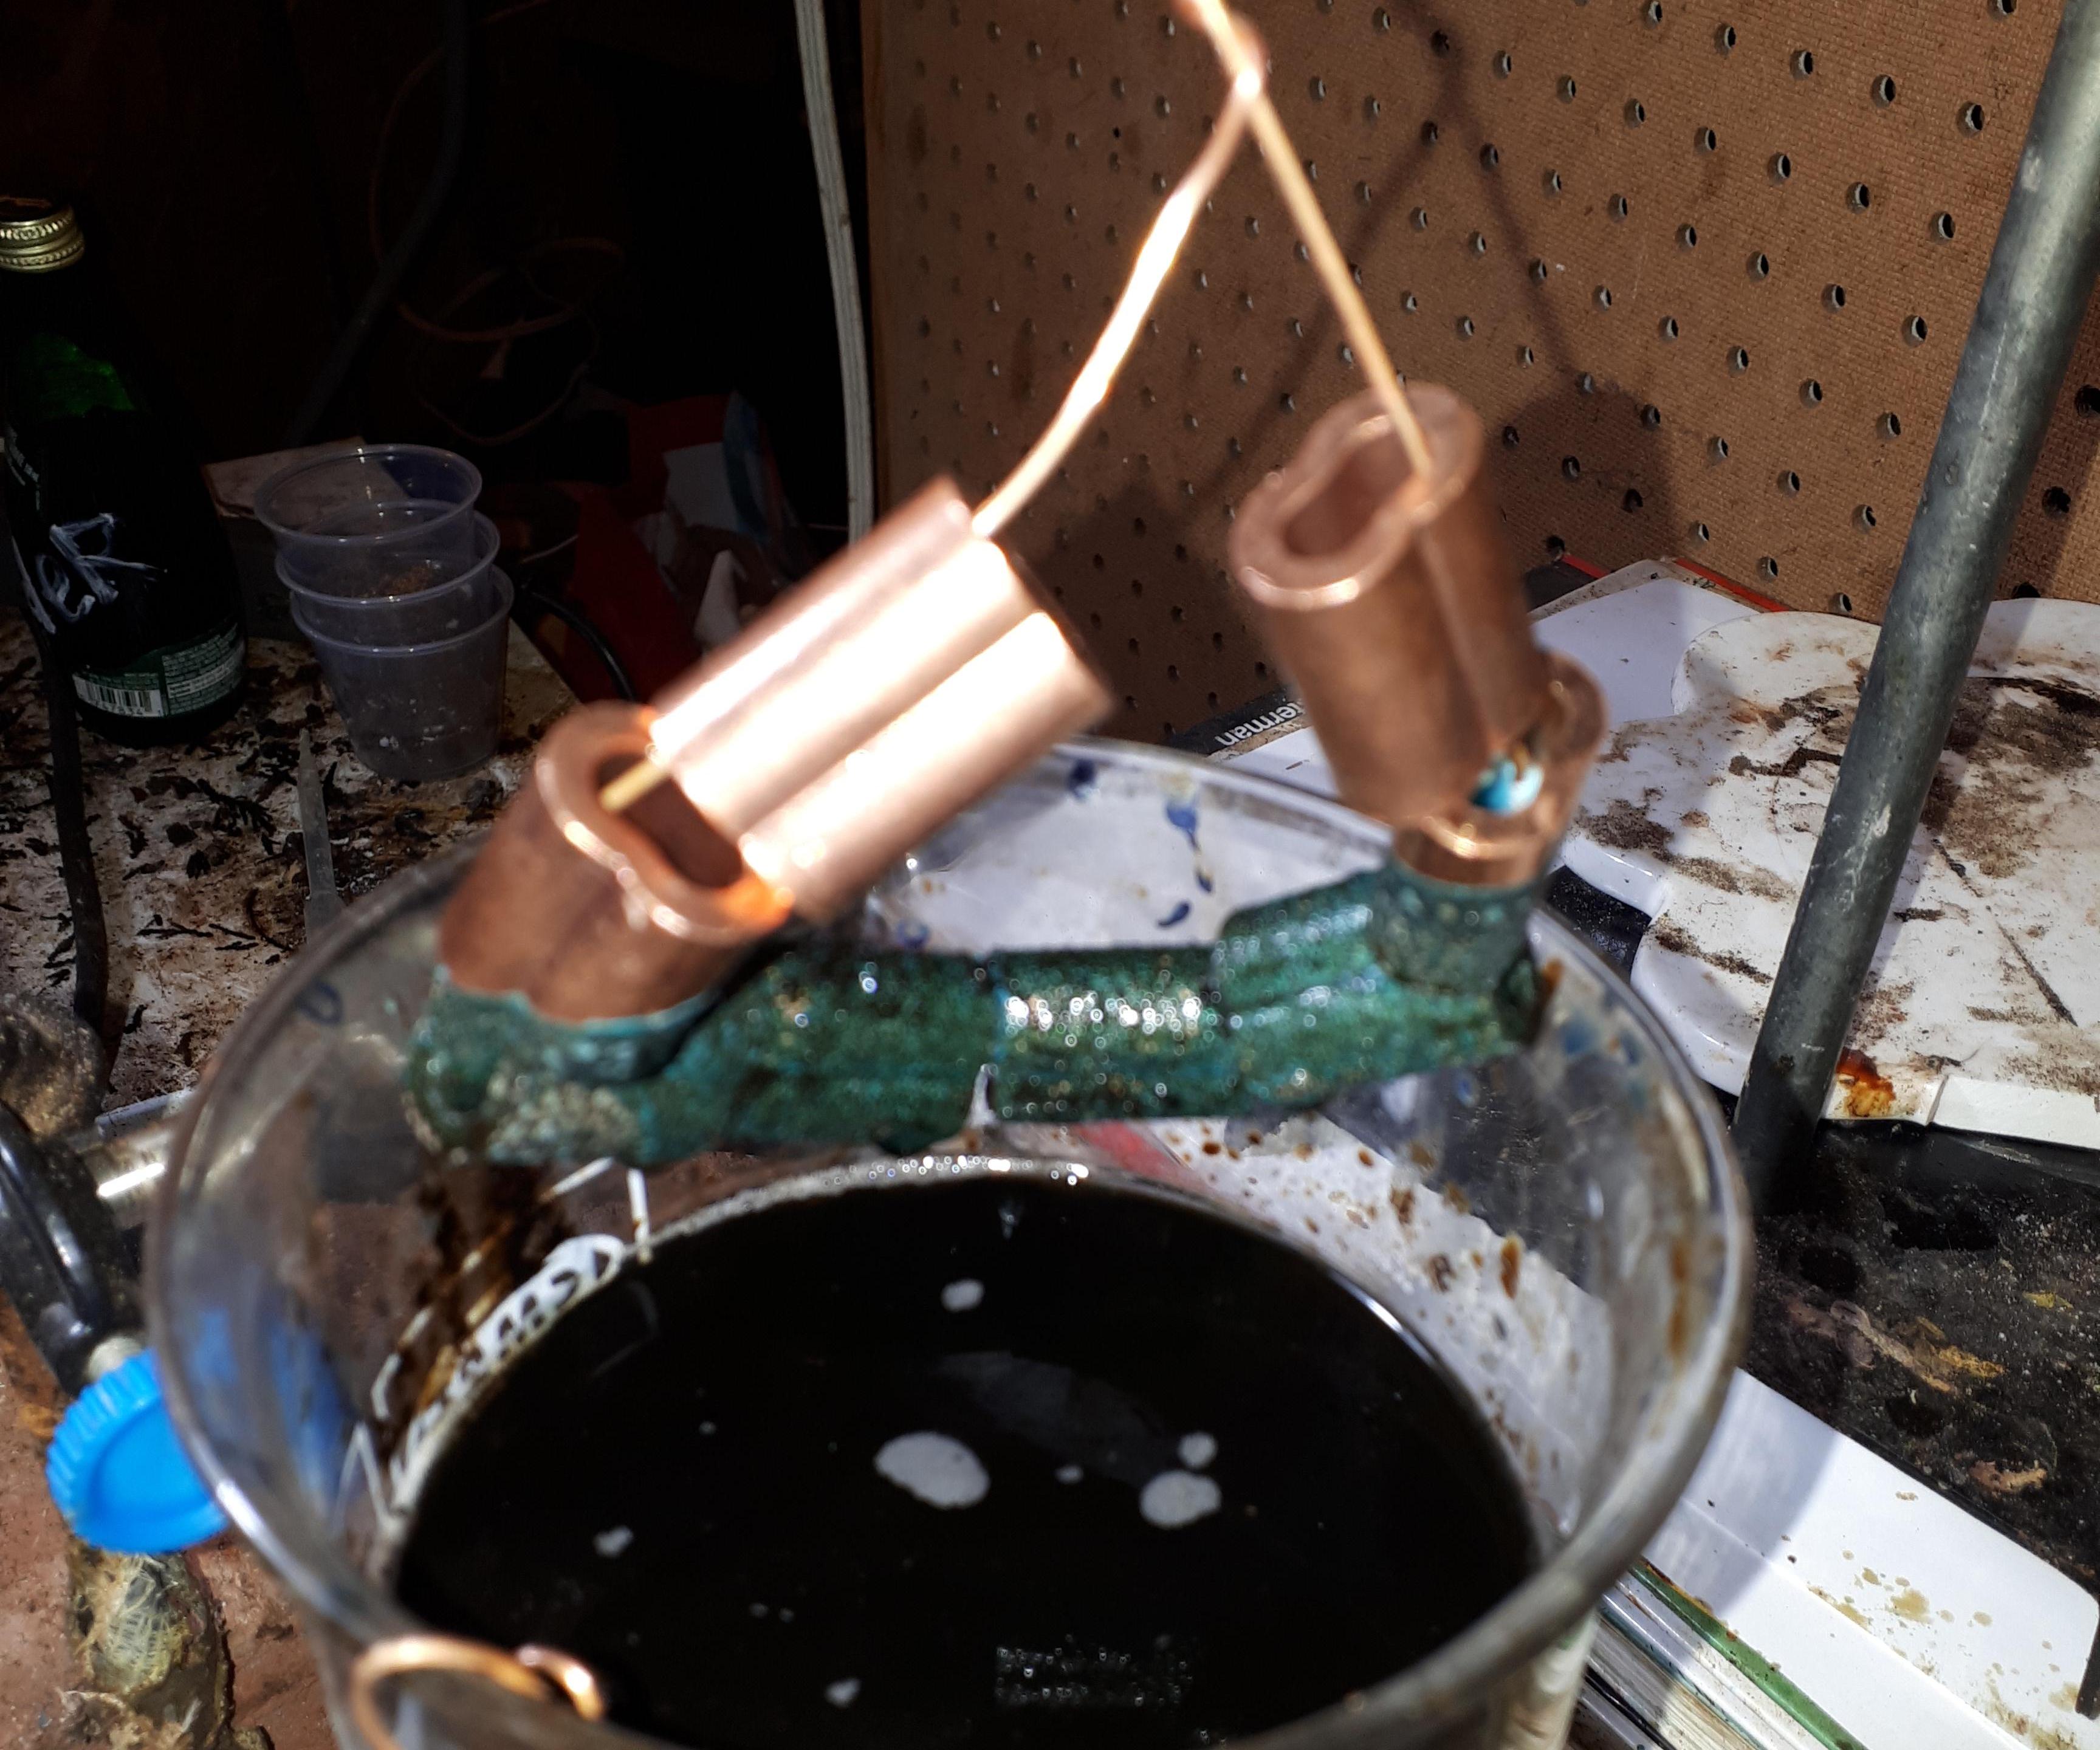 Potassium Permanganate , Sugar, Lye Electroplating Solution Onto Copper for Making Art.